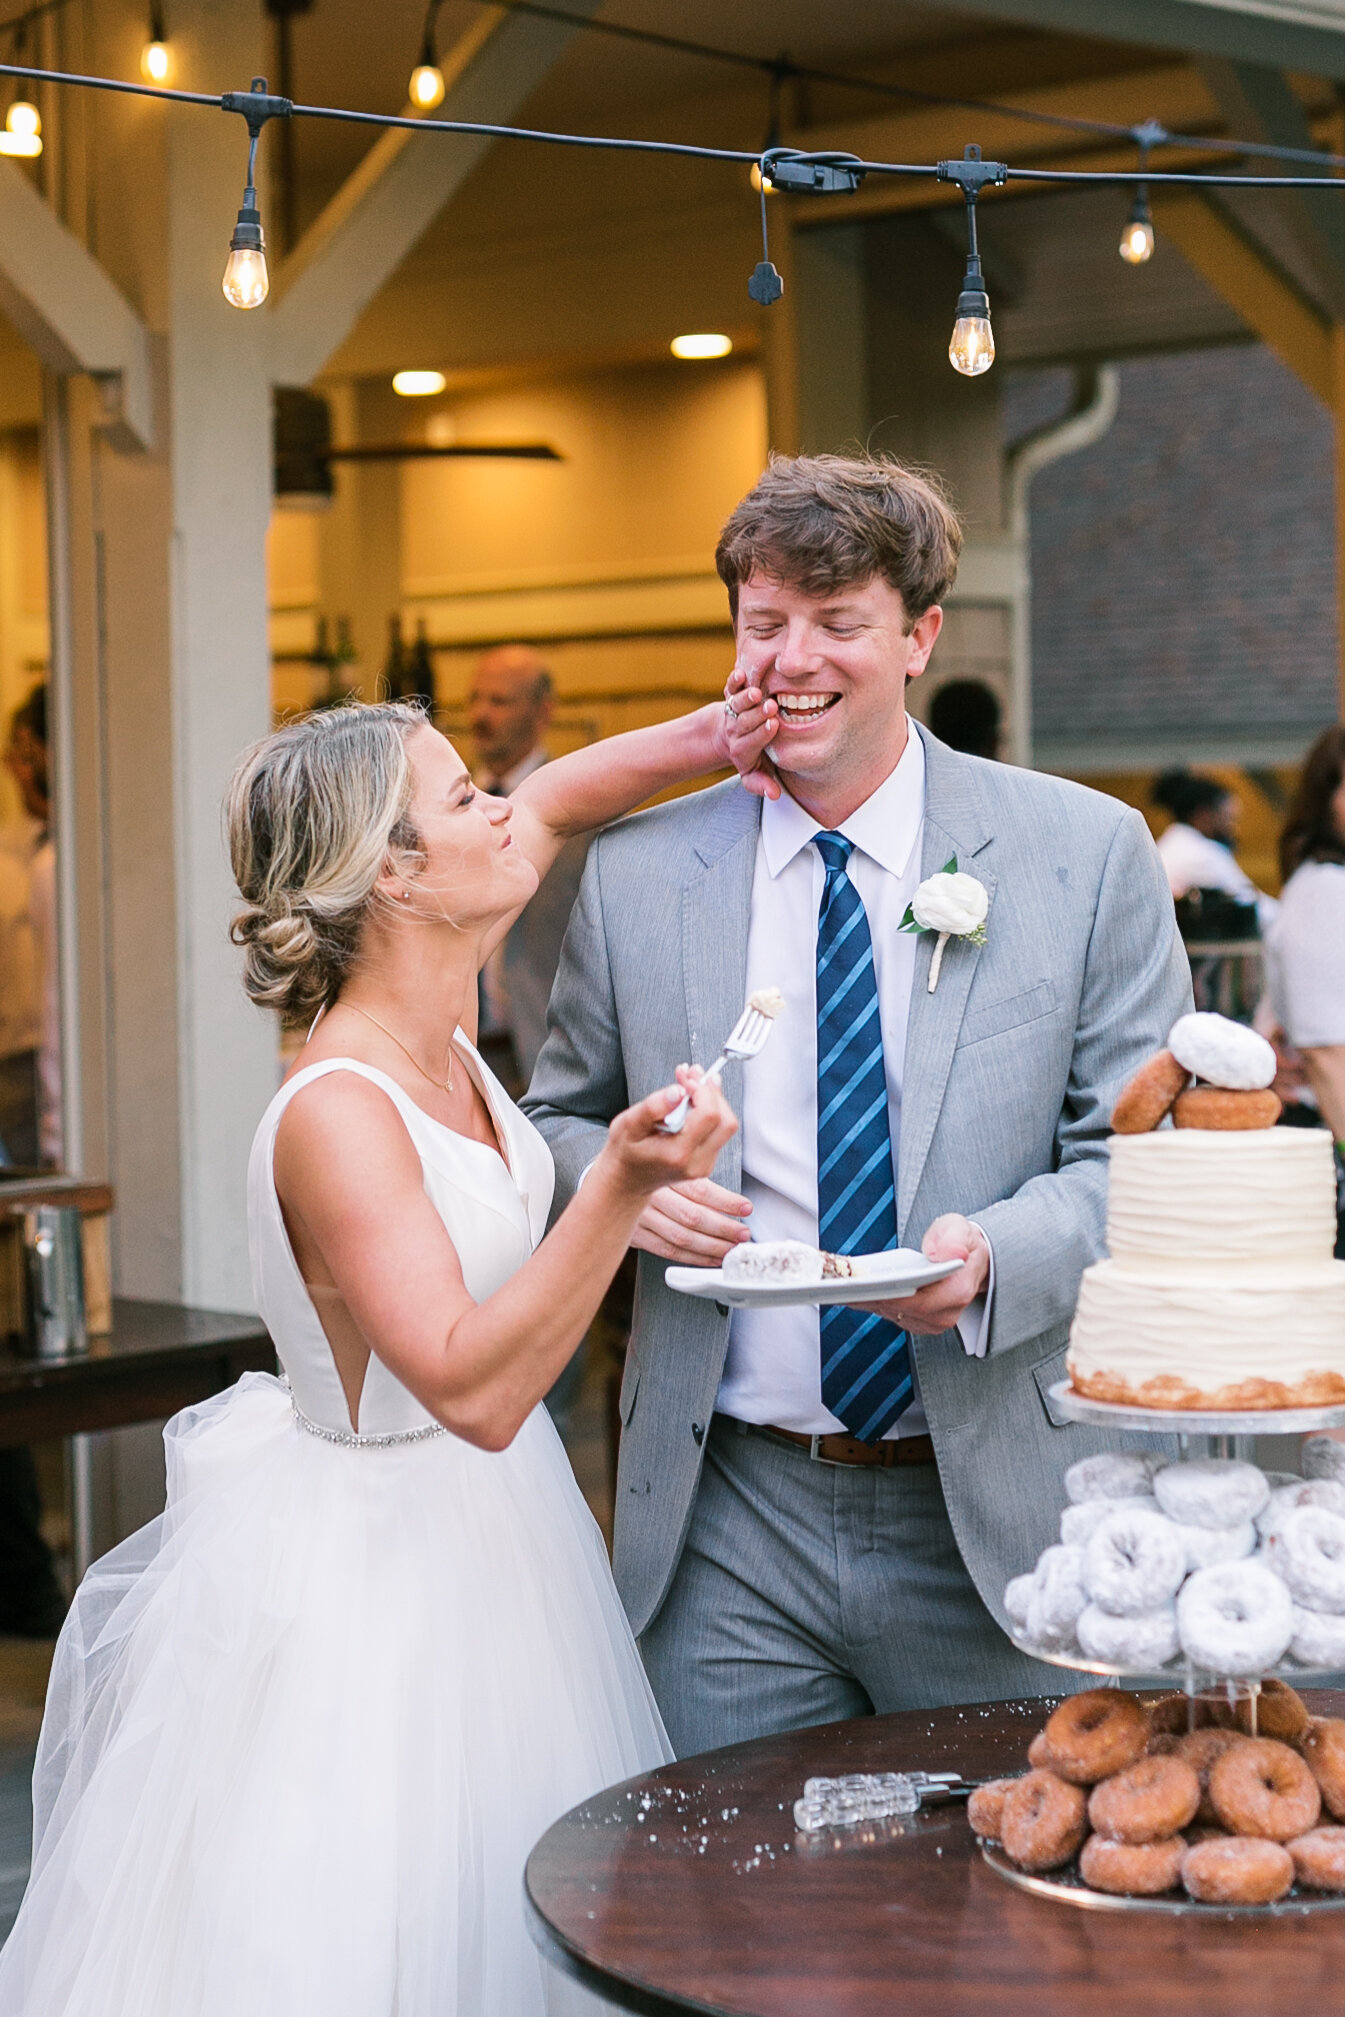 First cake cutting inspiration for South Carolina wedding.